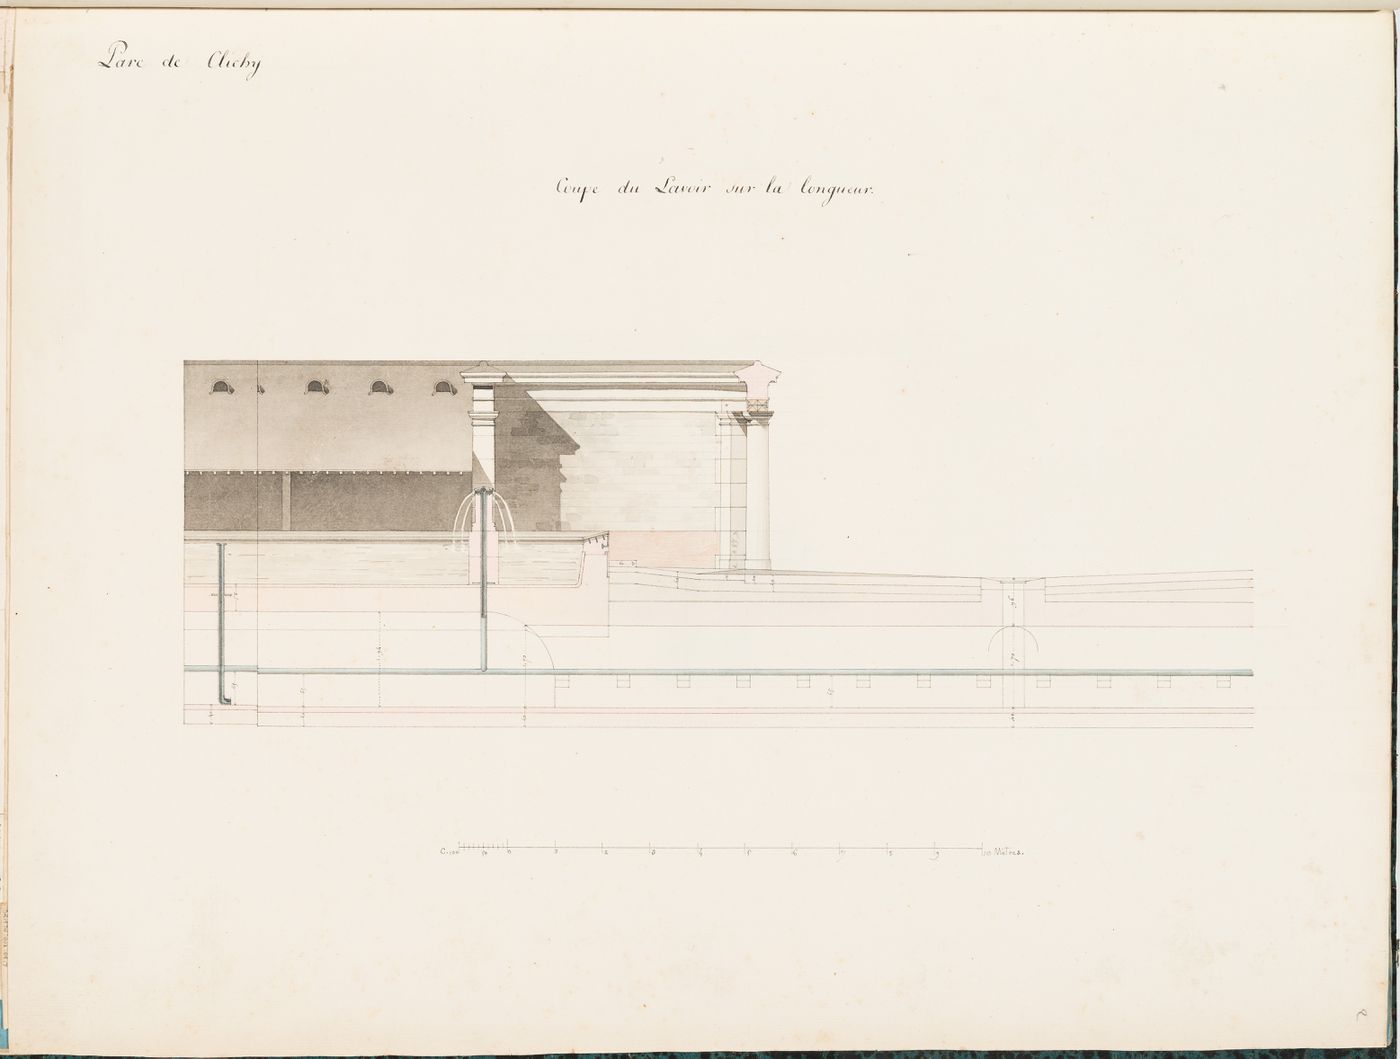 Partial longitudinal section for a washhouse showing its waterworks, Parc de Clichy